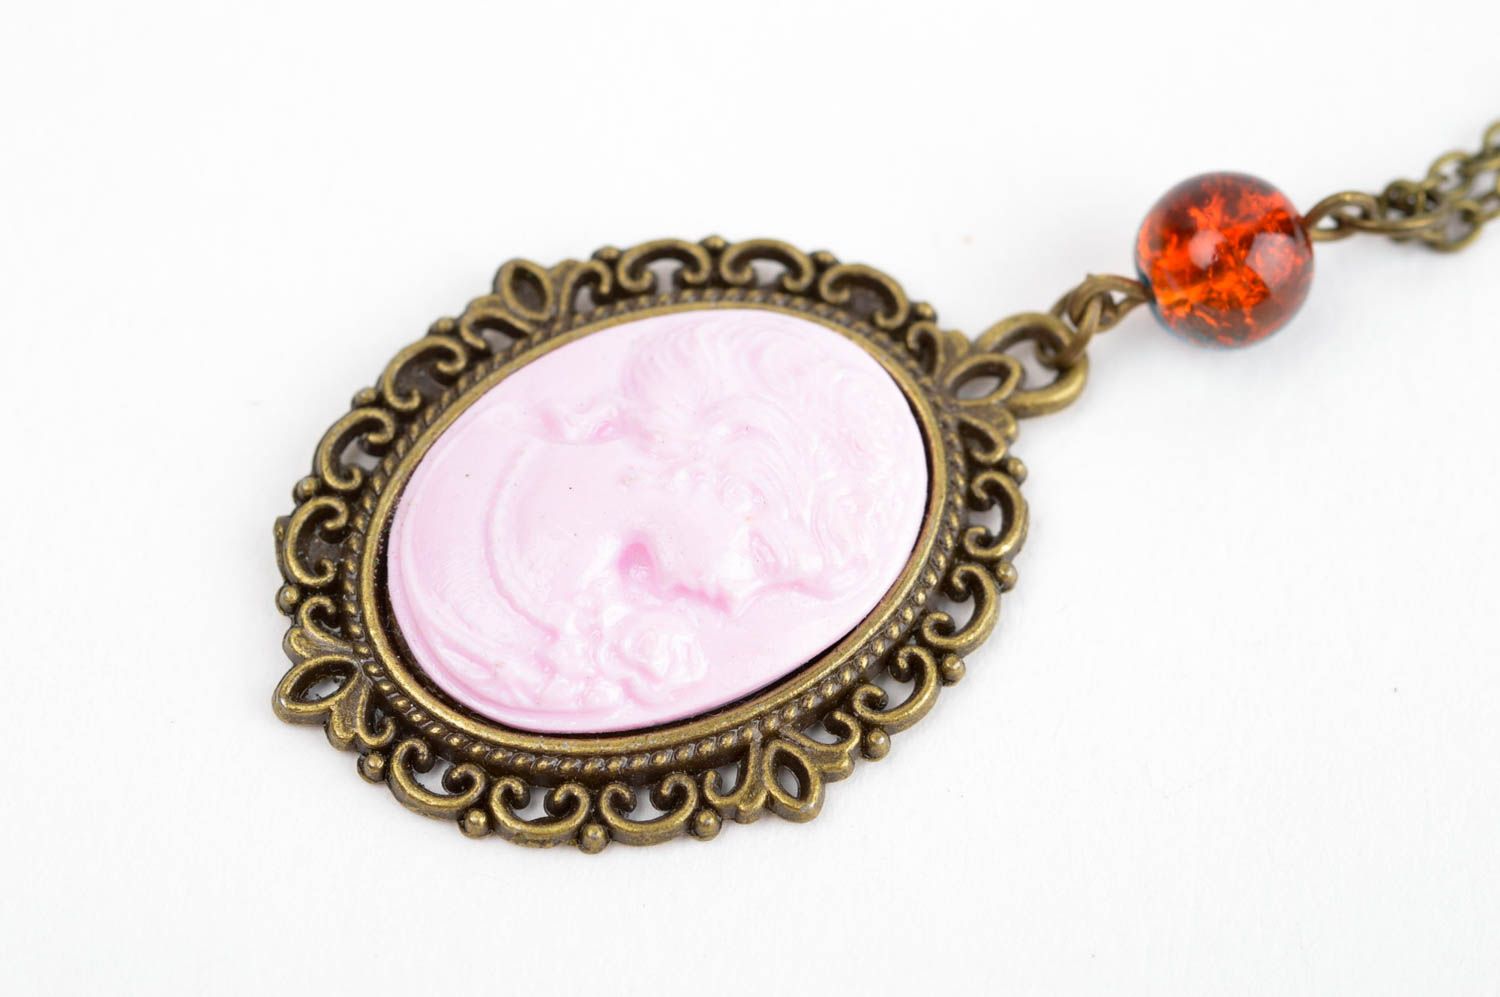 Handmade pendant unusual pendant designer accessory gift ideas clay jewelry photo 5